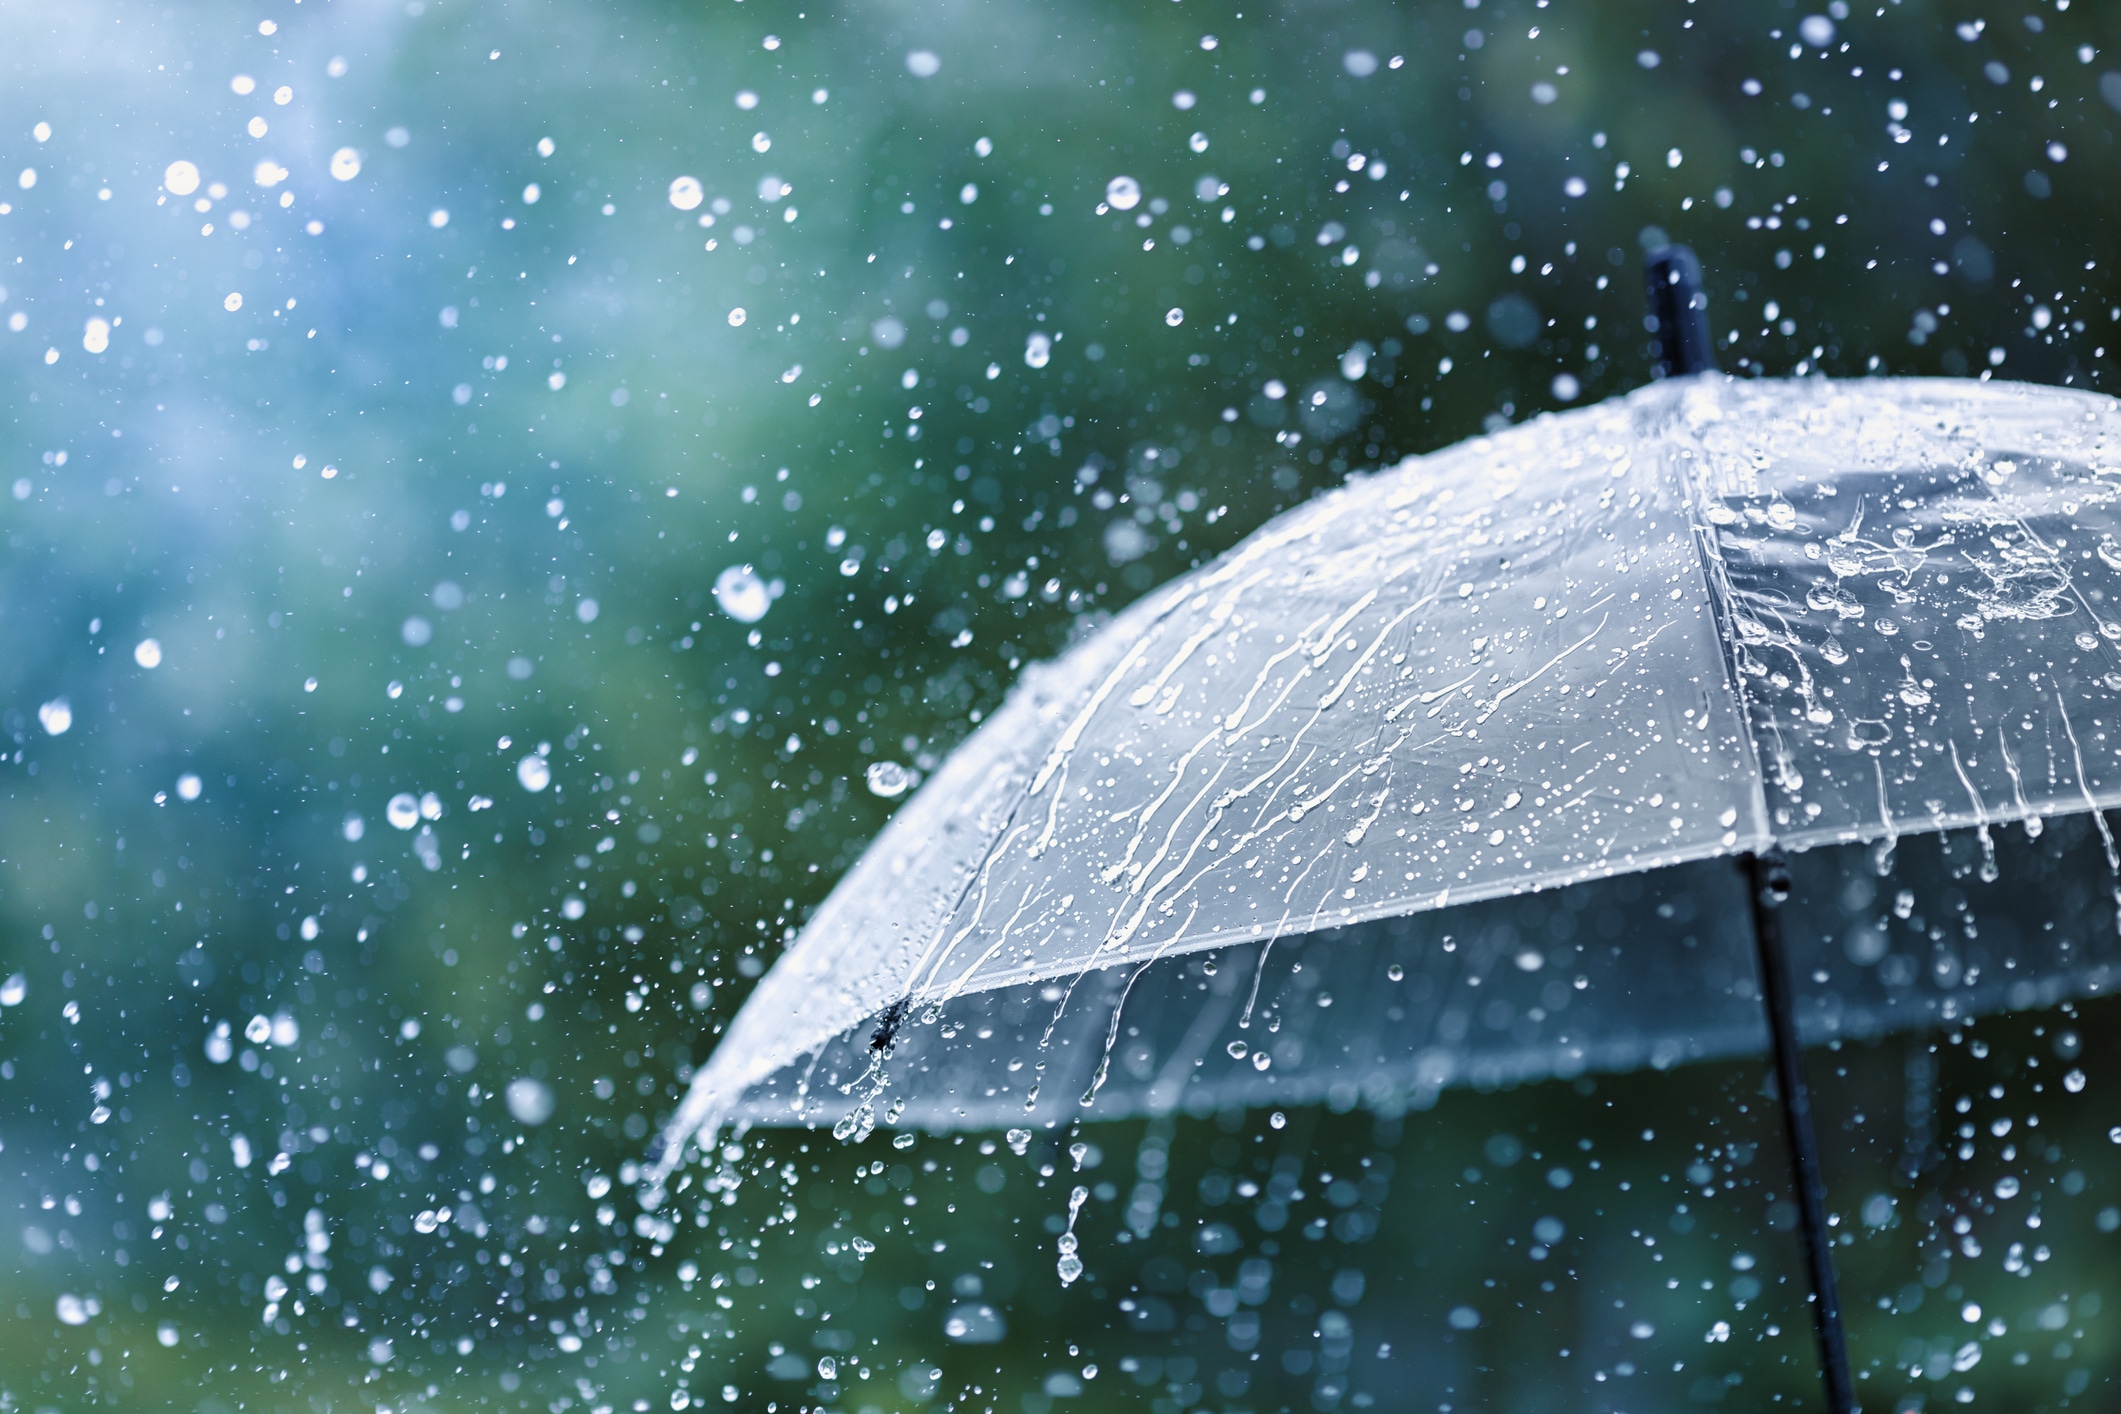 image of rain and umbrella